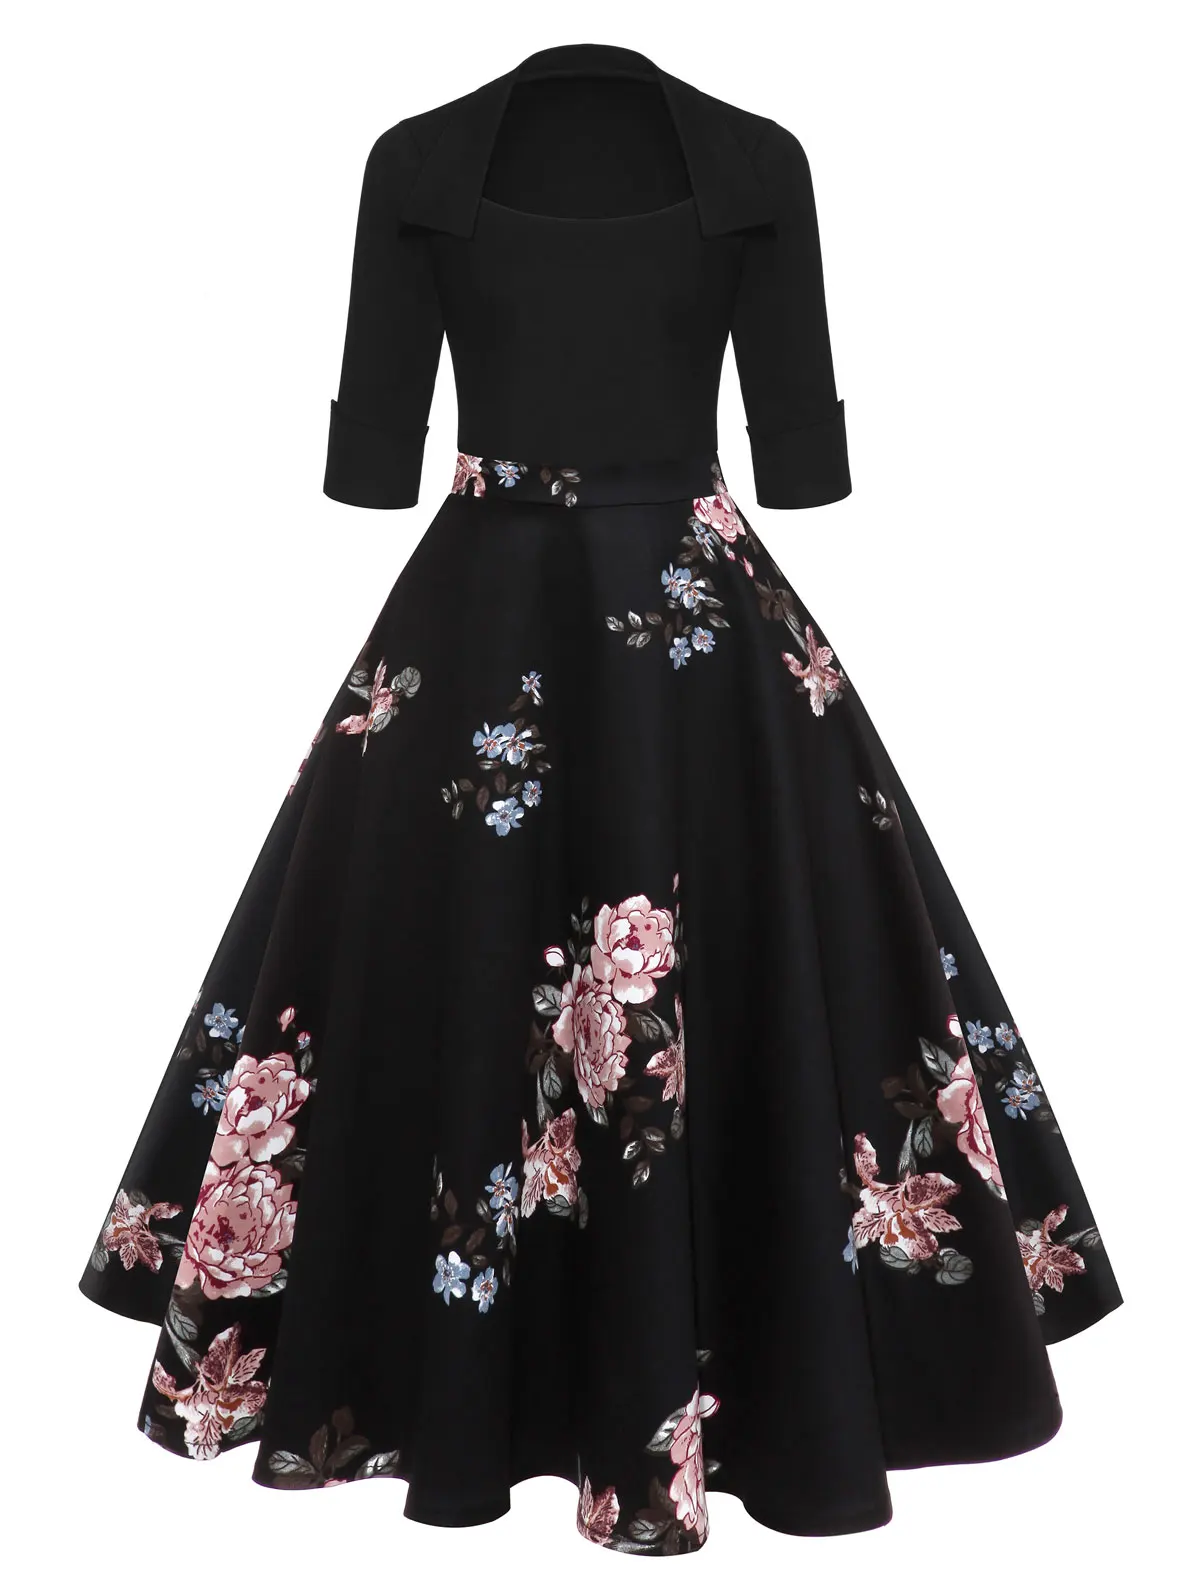 Gamiss Audrey Hepburn Vintage Party Dress Women Floral Flare Midi ...